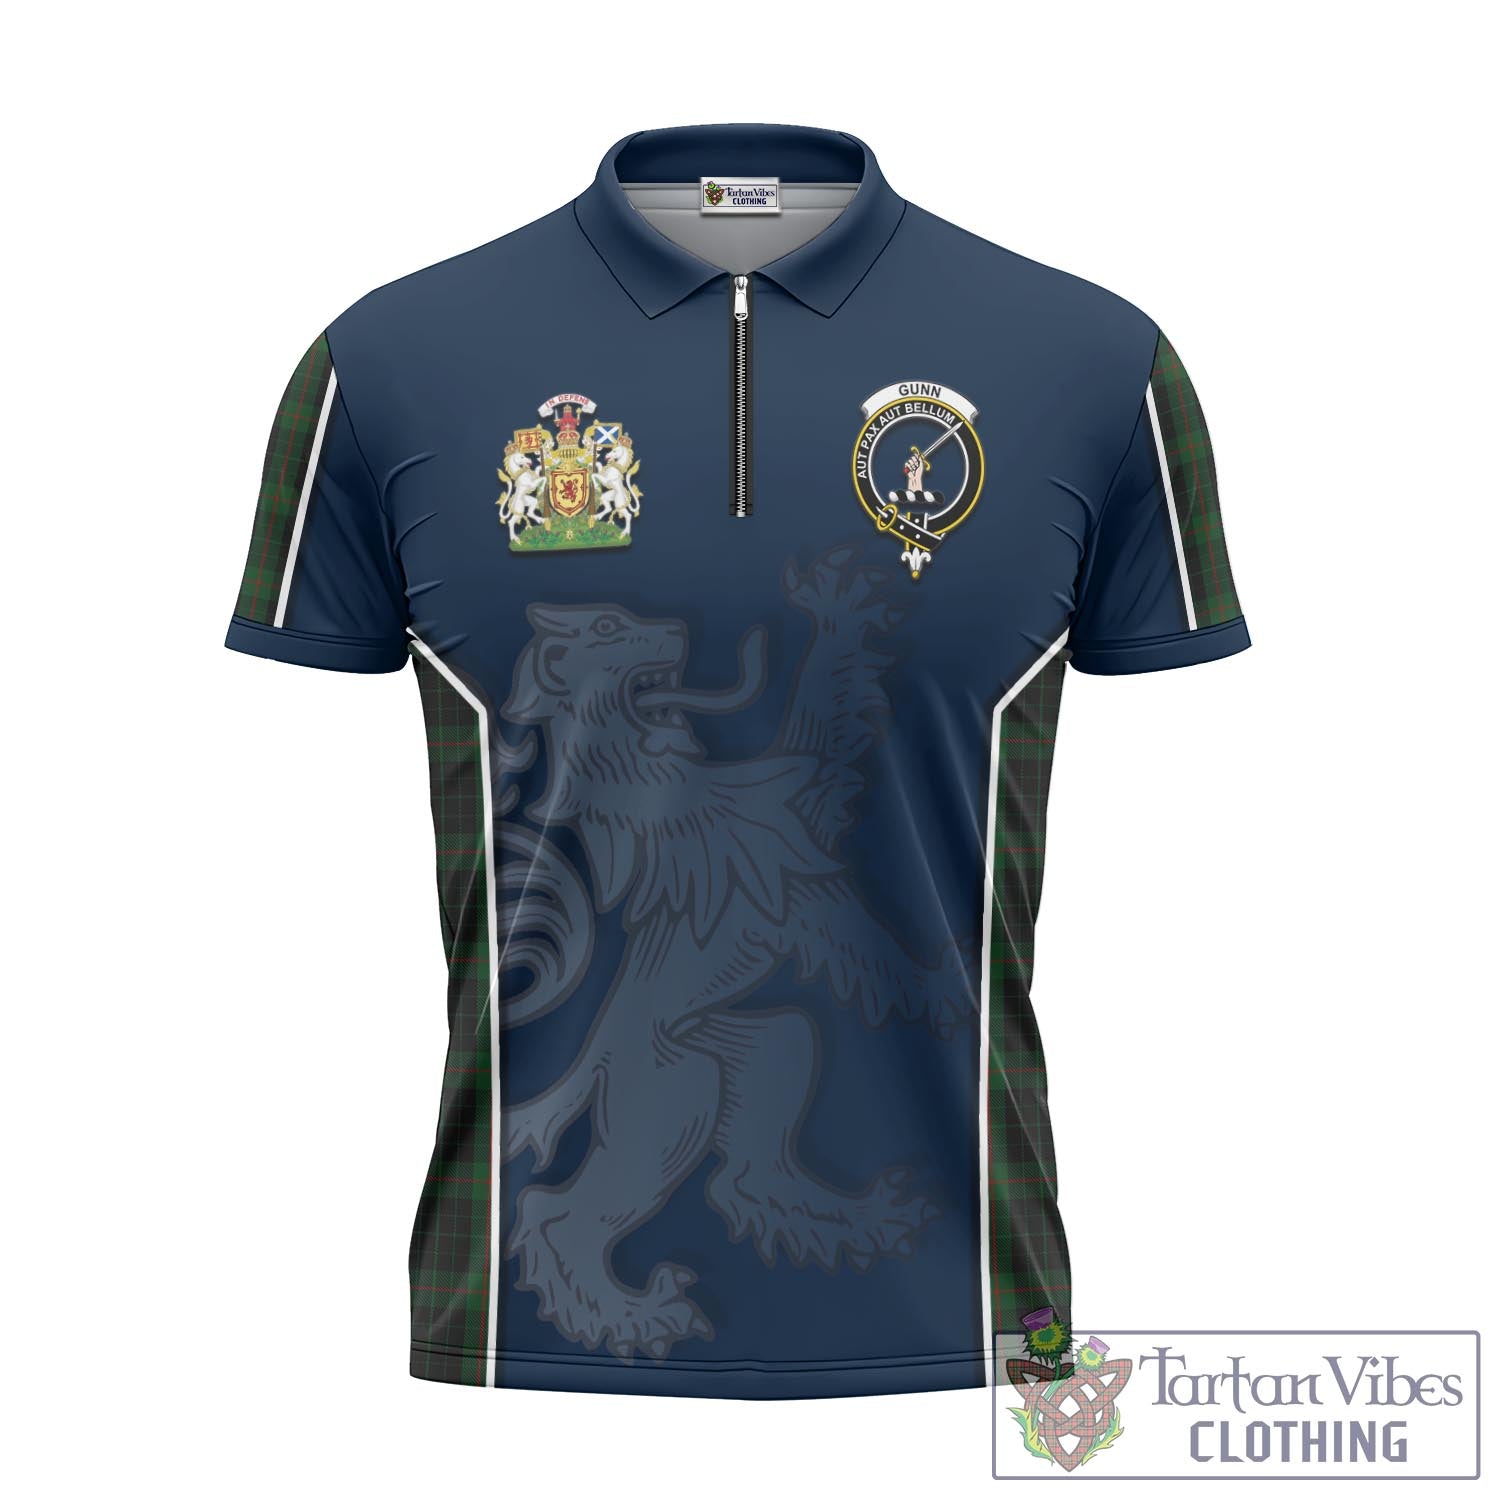 Tartan Vibes Clothing Gunn Logan Tartan Zipper Polo Shirt with Family Crest and Lion Rampant Vibes Sport Style